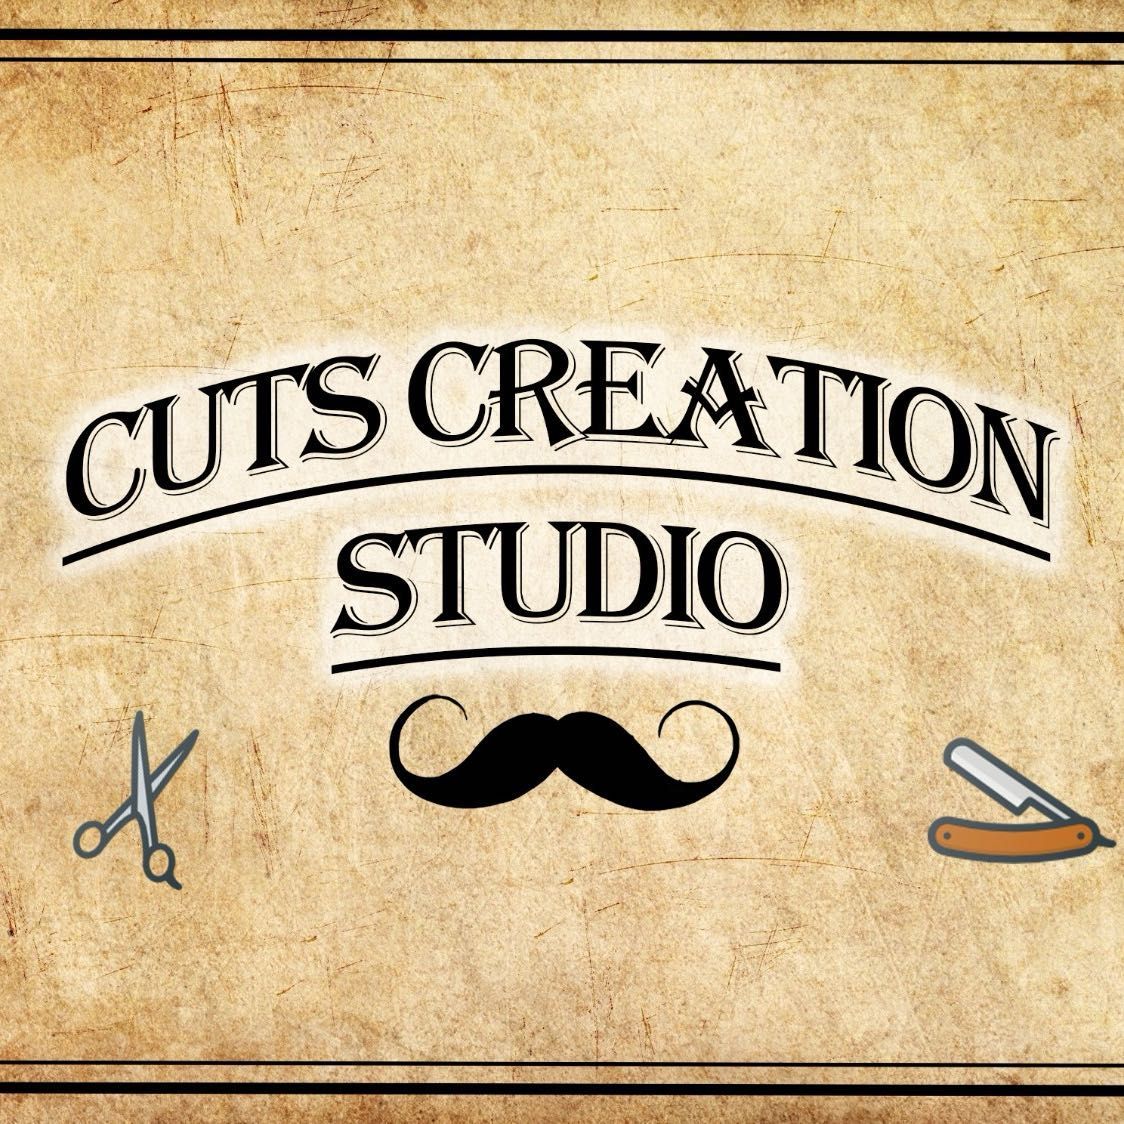 Cuts Creation Studio, 437 Kingsland Ave, Lyndhurst, 07071